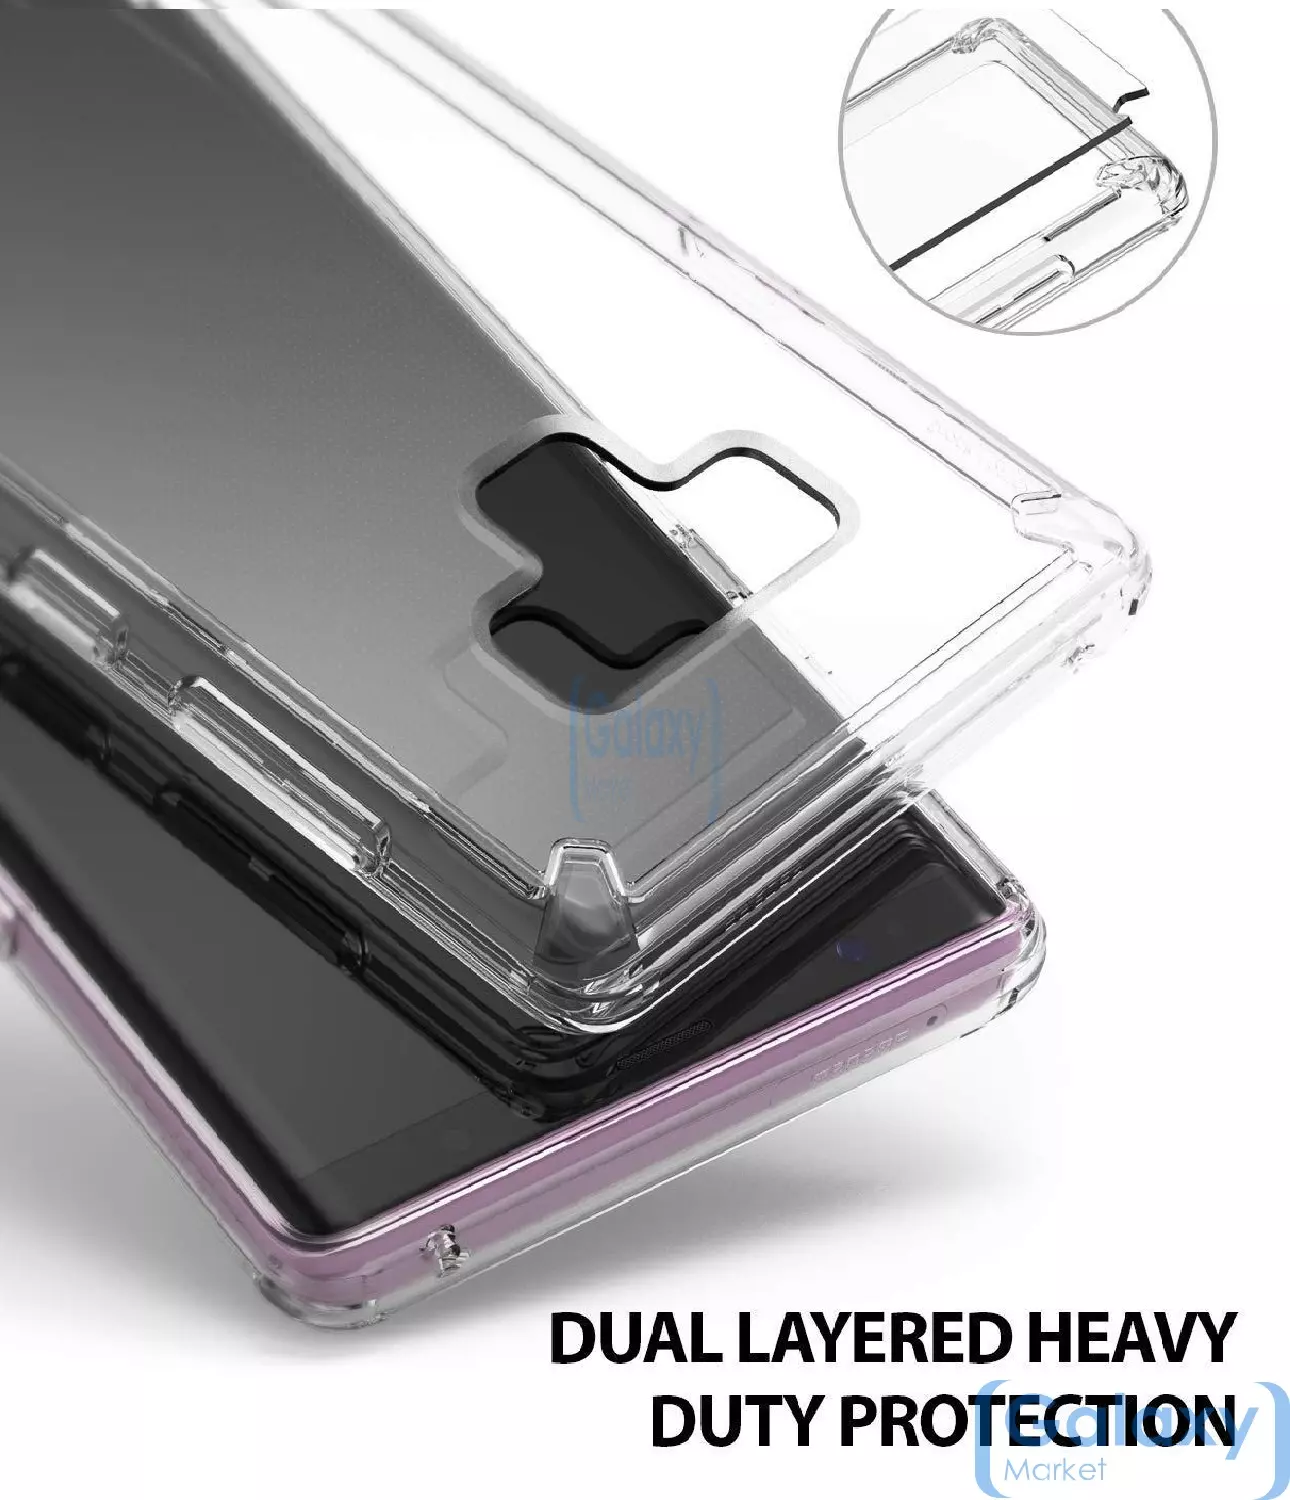 Чехол бампер Ringke Fusion Series для Samsung Galaxy Note 9 Smoke Black (Дымчатый Черный)